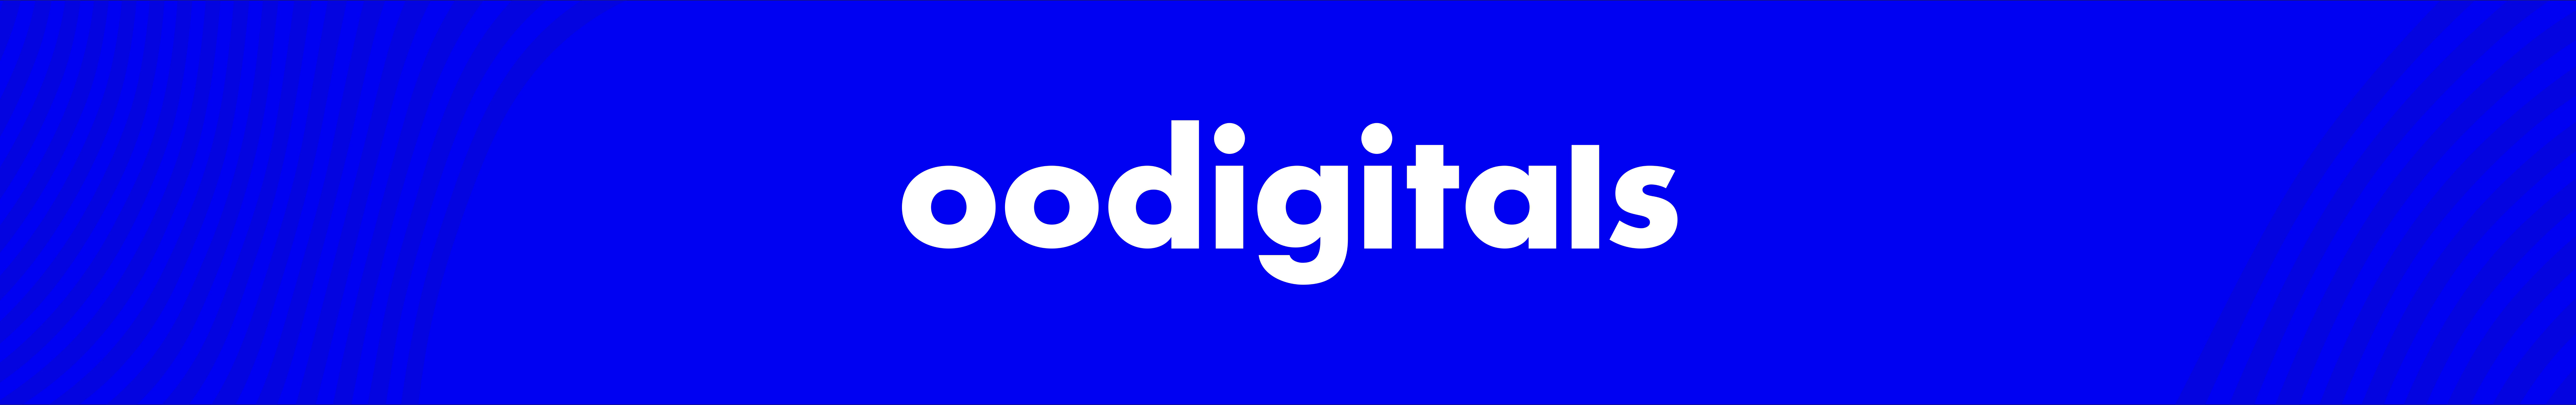 OO Digitals's profile banner